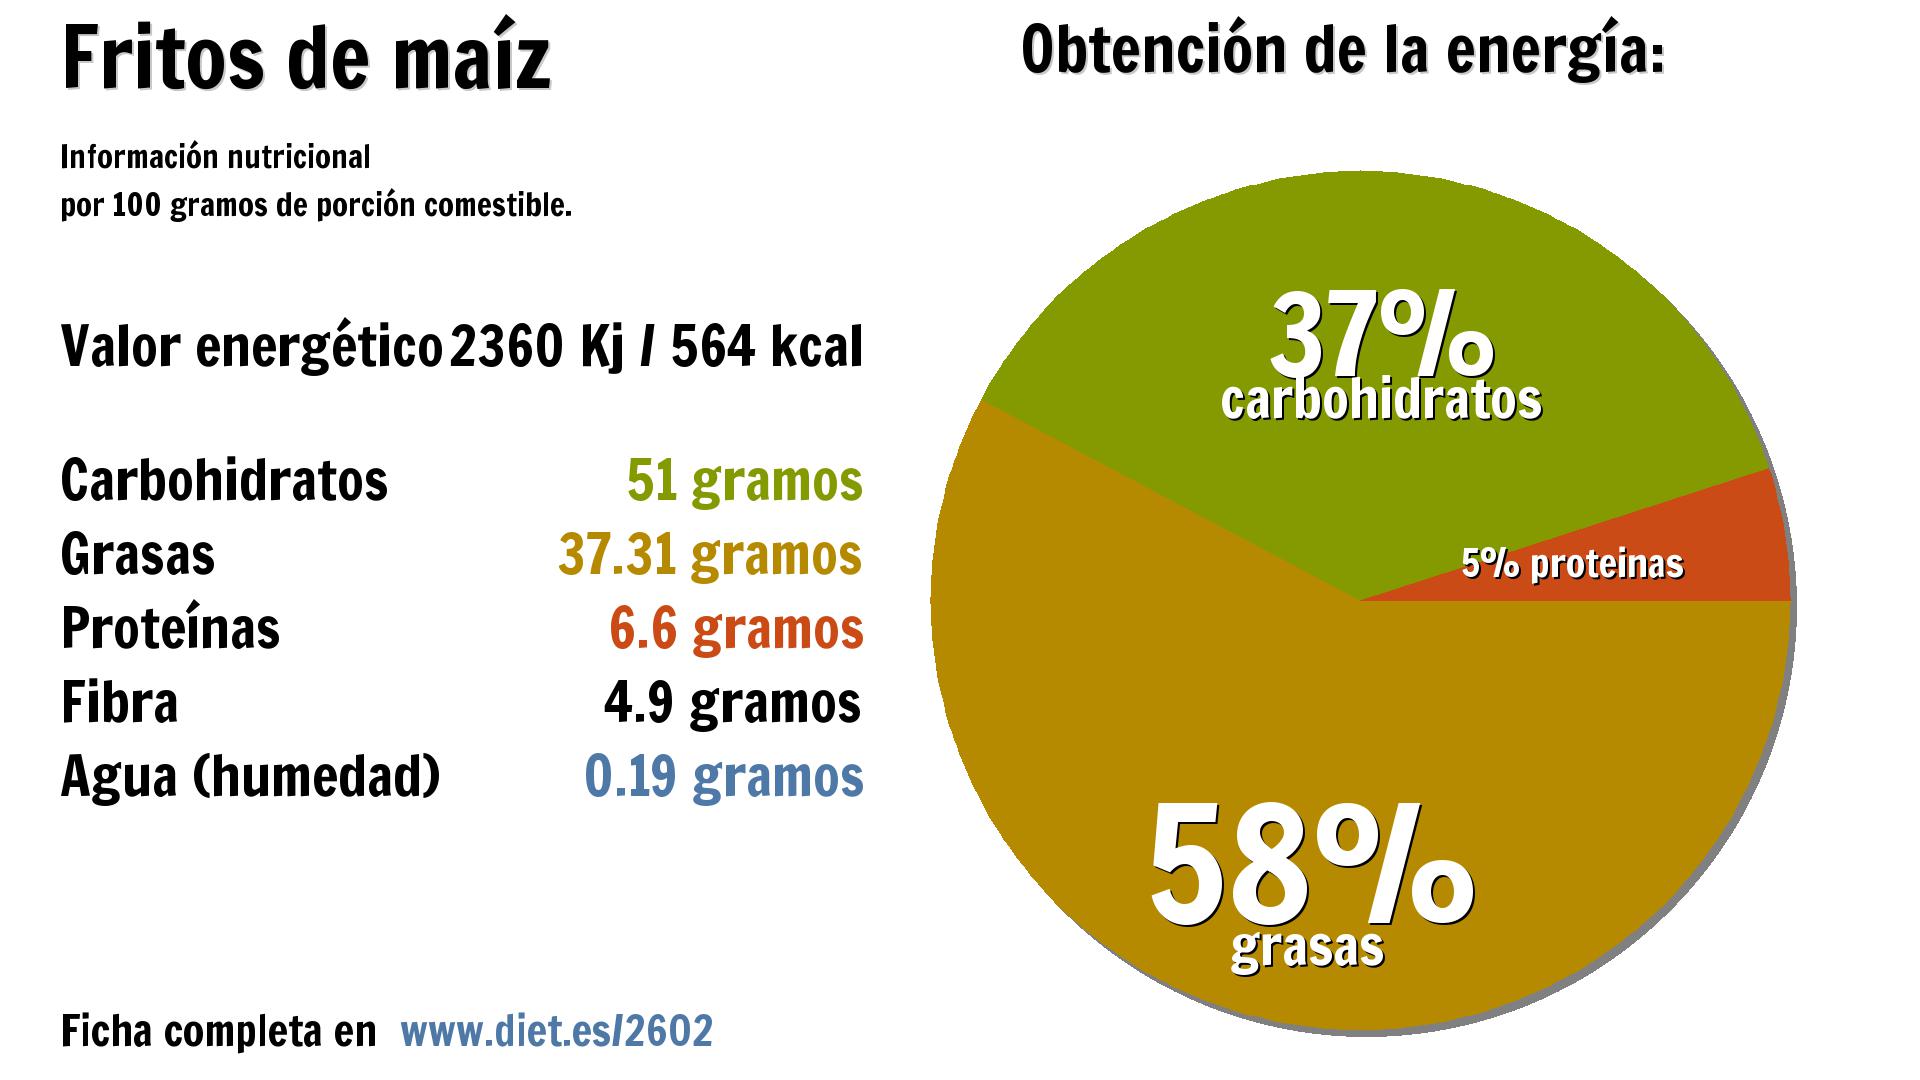 Fritos de maíz: energía 2360 Kj, carbohidratos 51 g., grasas 37 g., proteínas 7 g. y fibra 5 g.